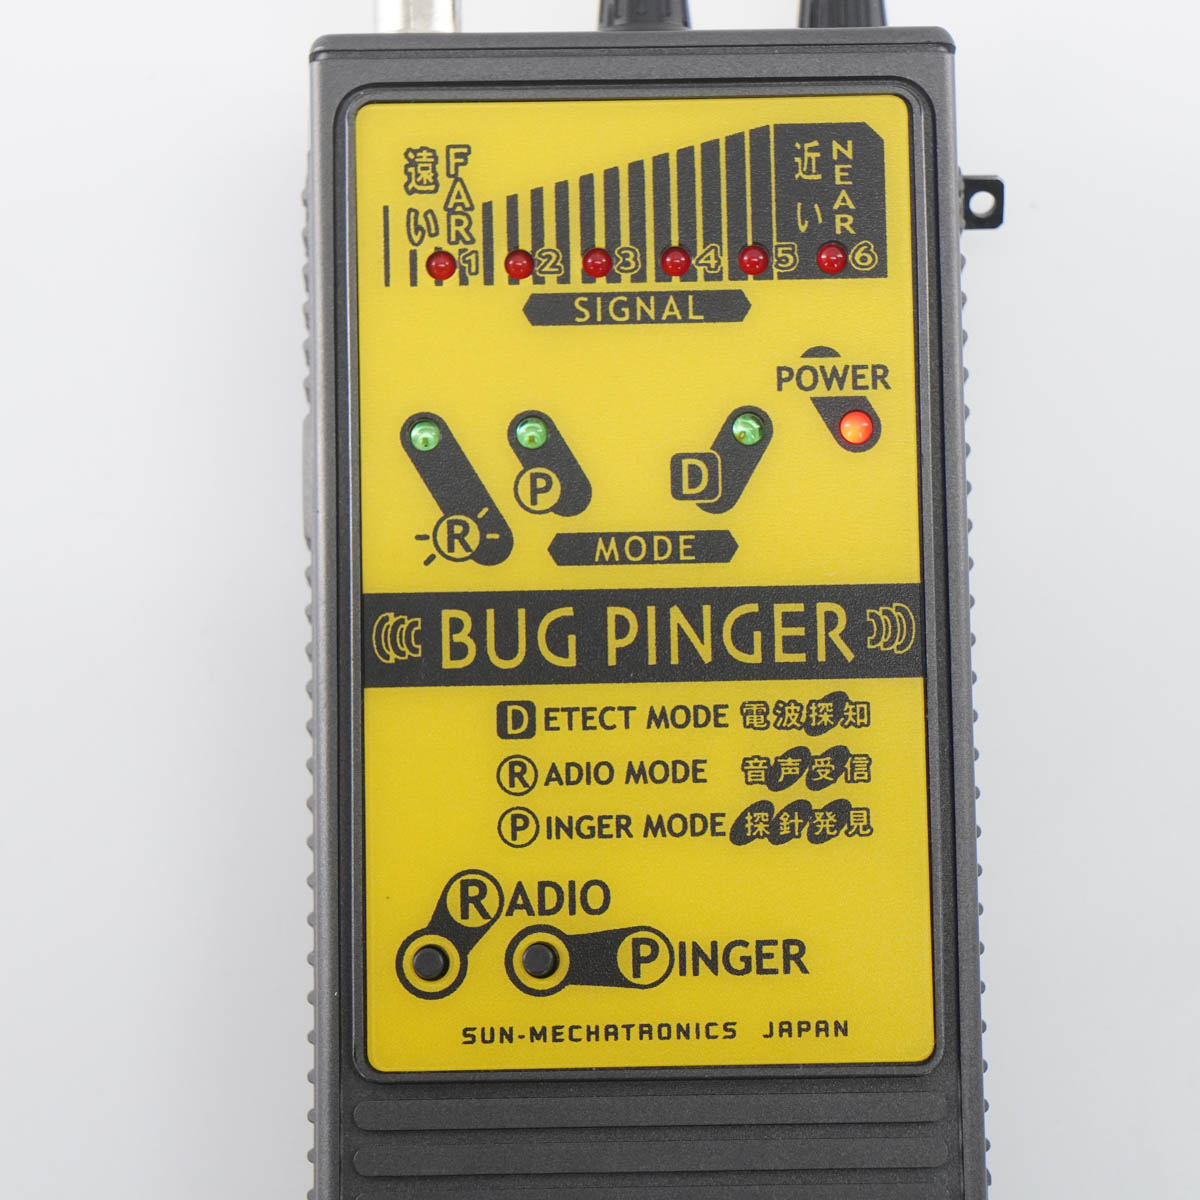 [PG]USED 8日保証 SUN MECHATRONICS BUG PINGER バグピンガー 多機能盗聴器発見機[ST03684-0007